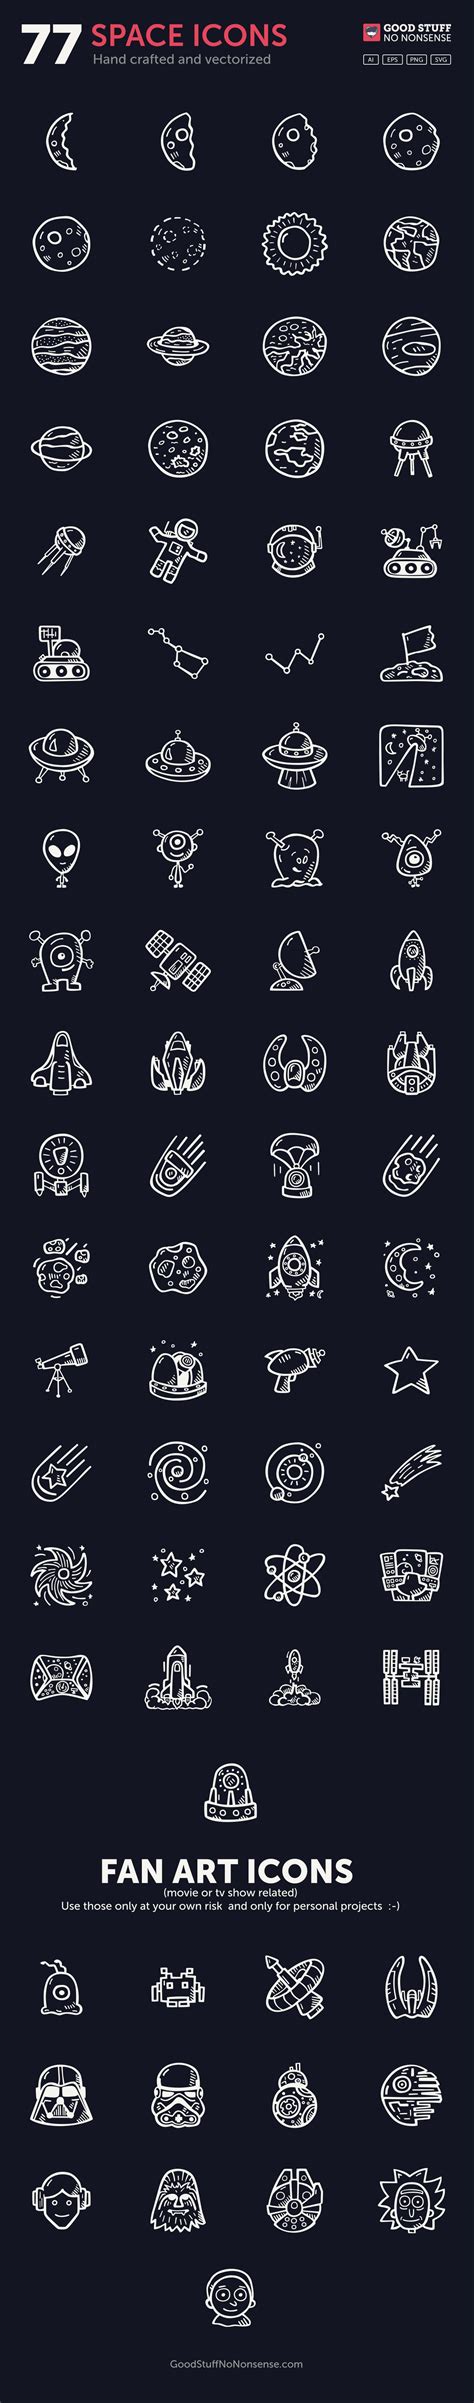 77 Hand-Drawn Space Icons That’ll Take You Into Unexplored Territories (Freebie) — Smashing Magazine